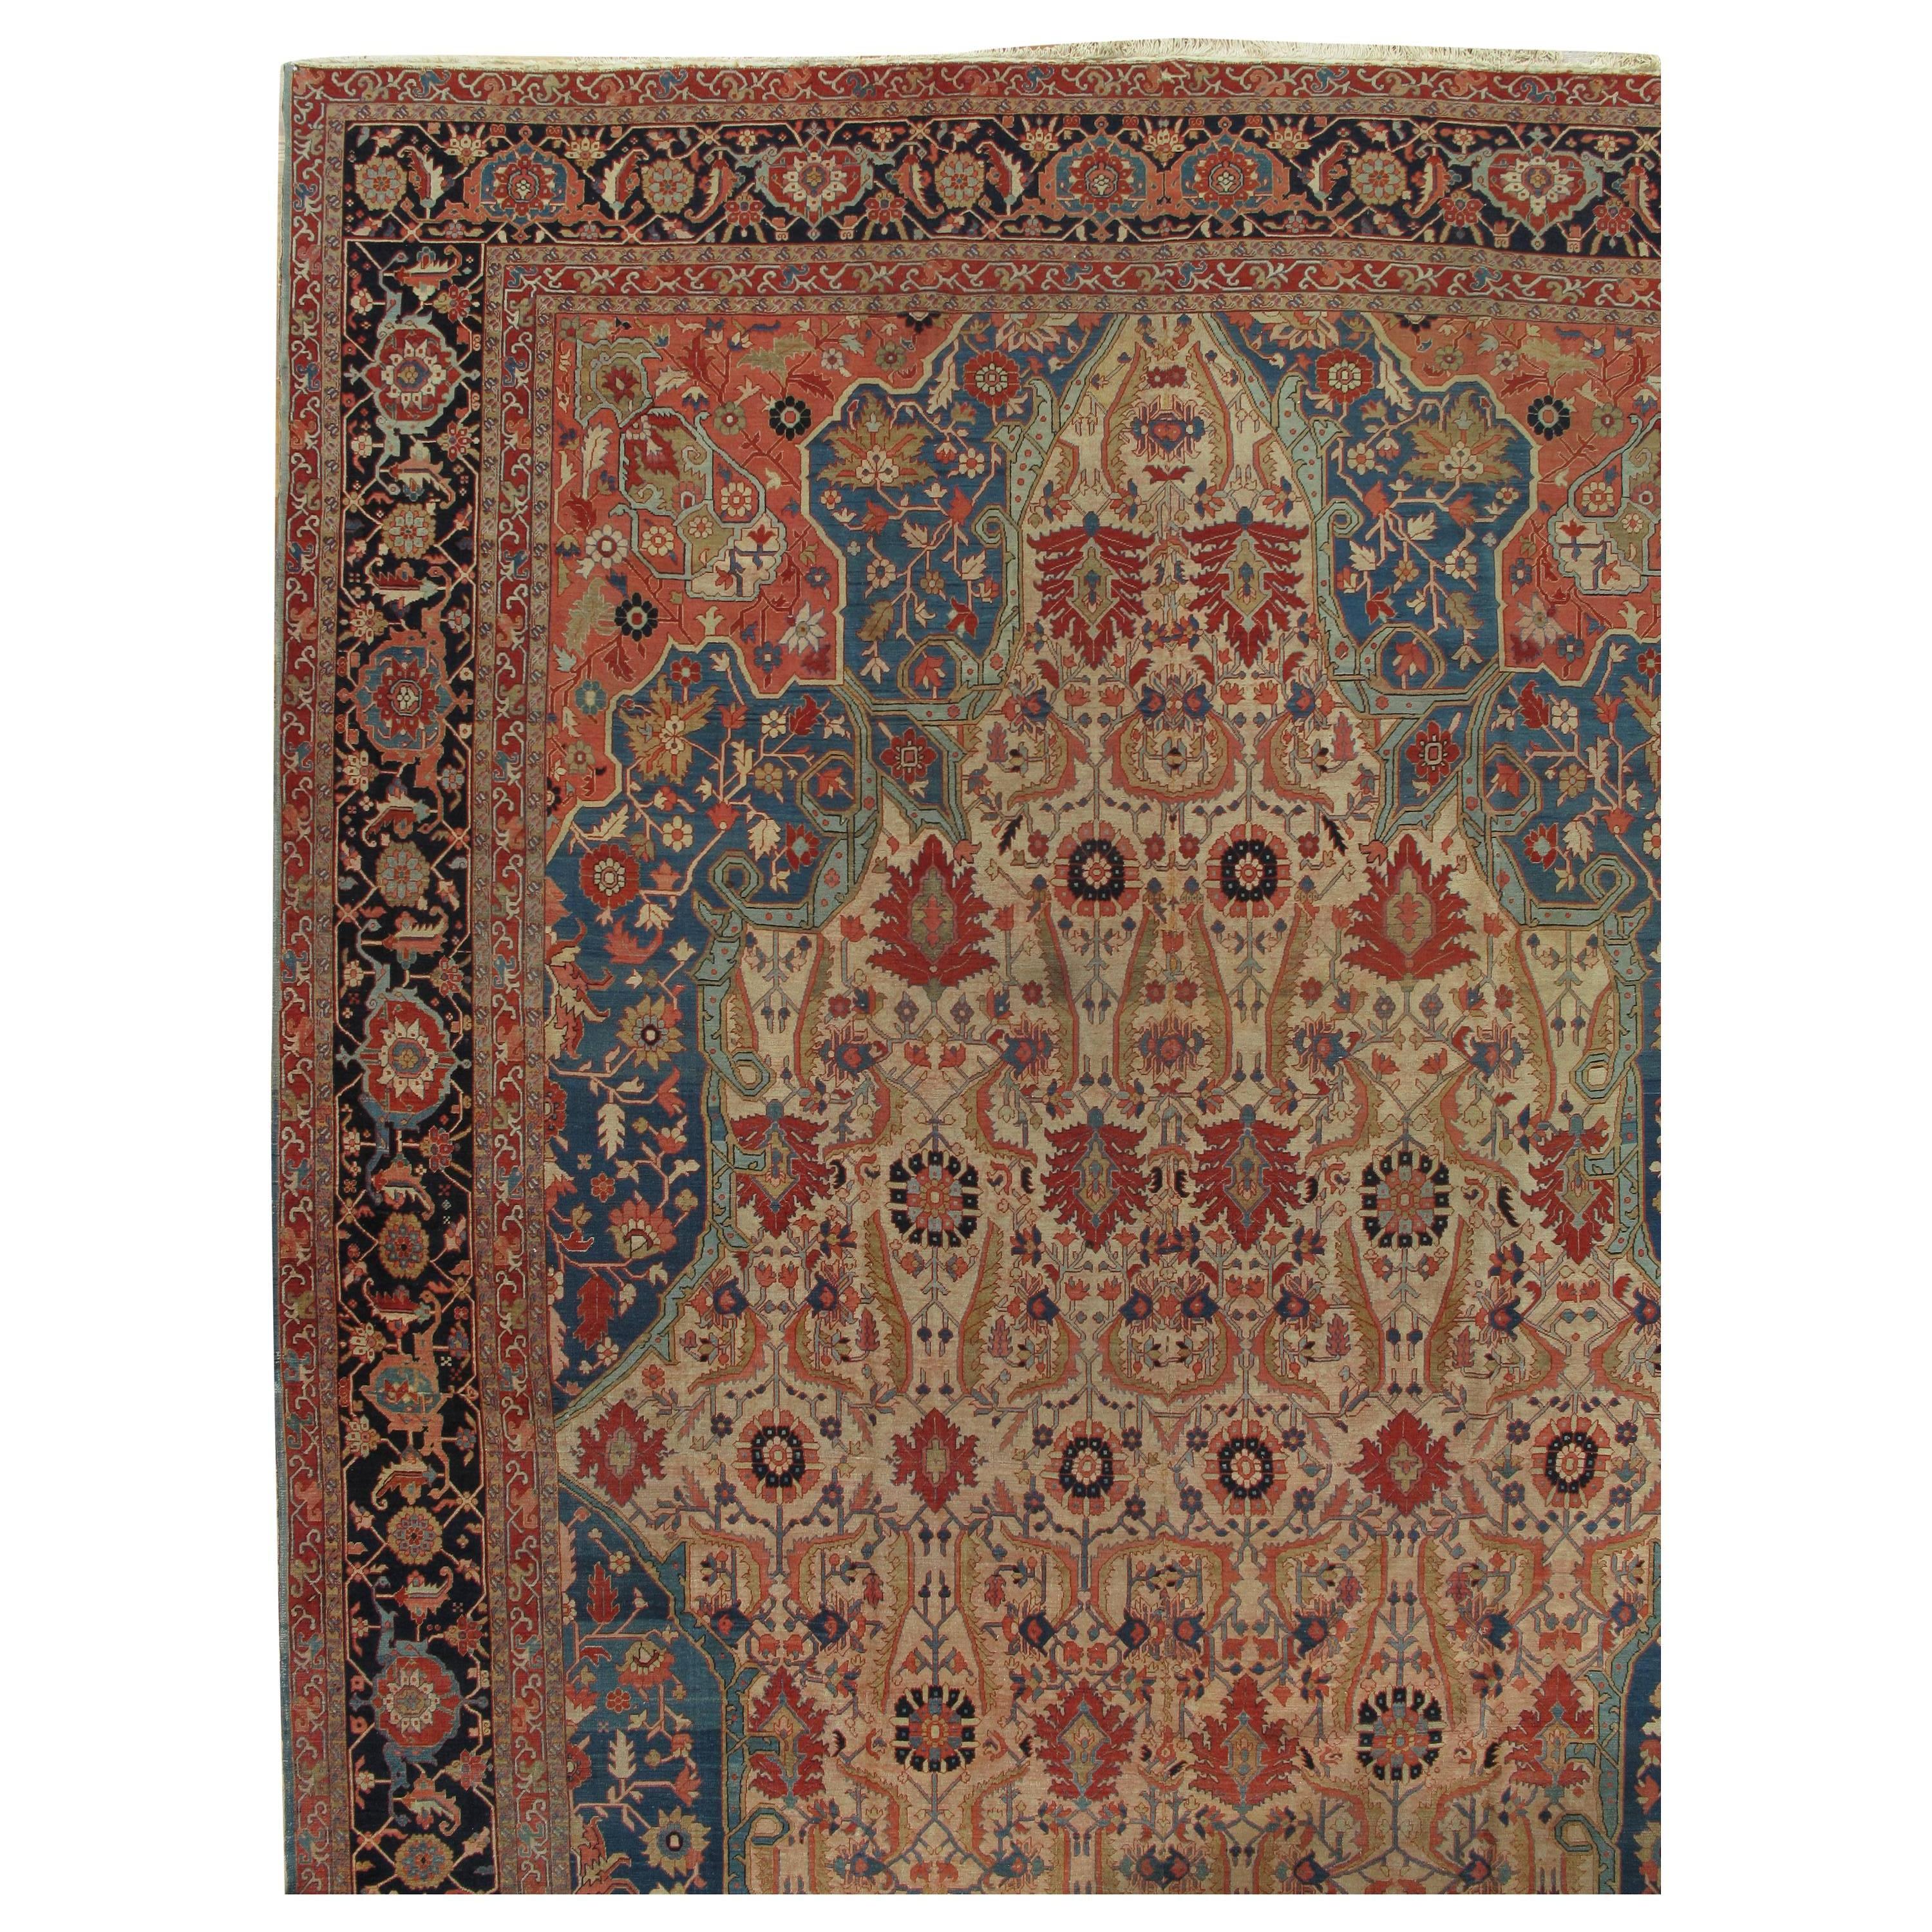 Antique Persian Serapi Carpet, Handmade Wool Oriental Rug, Ivory and Light Blue